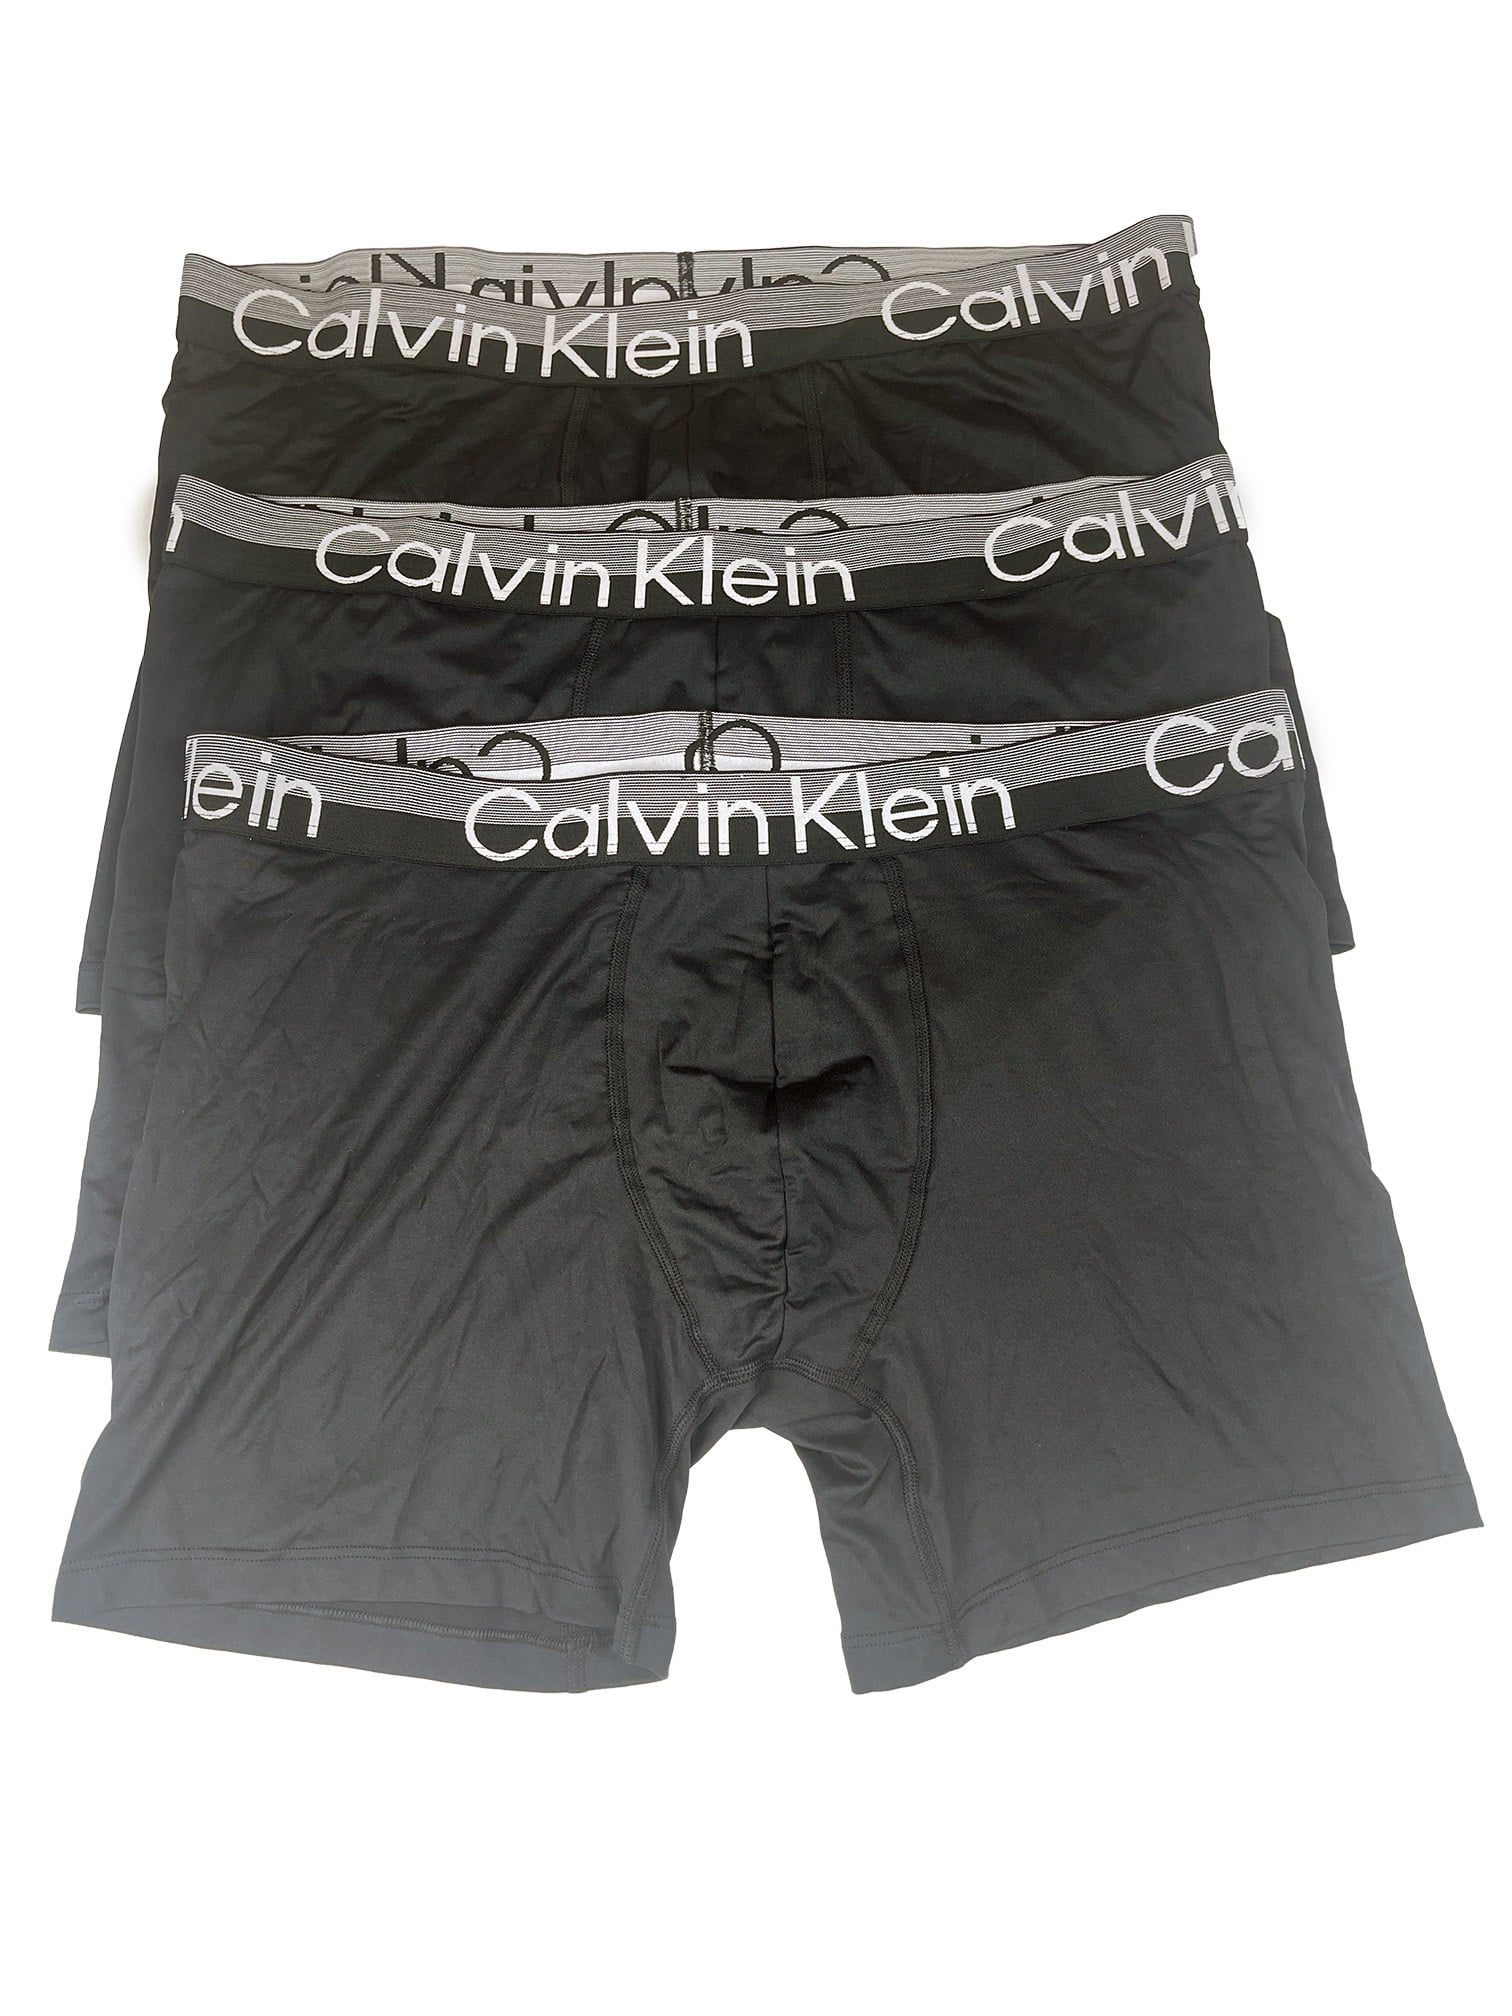 Calvin Klein Comfort Microfiber 3-Pack Boxer Brief Black